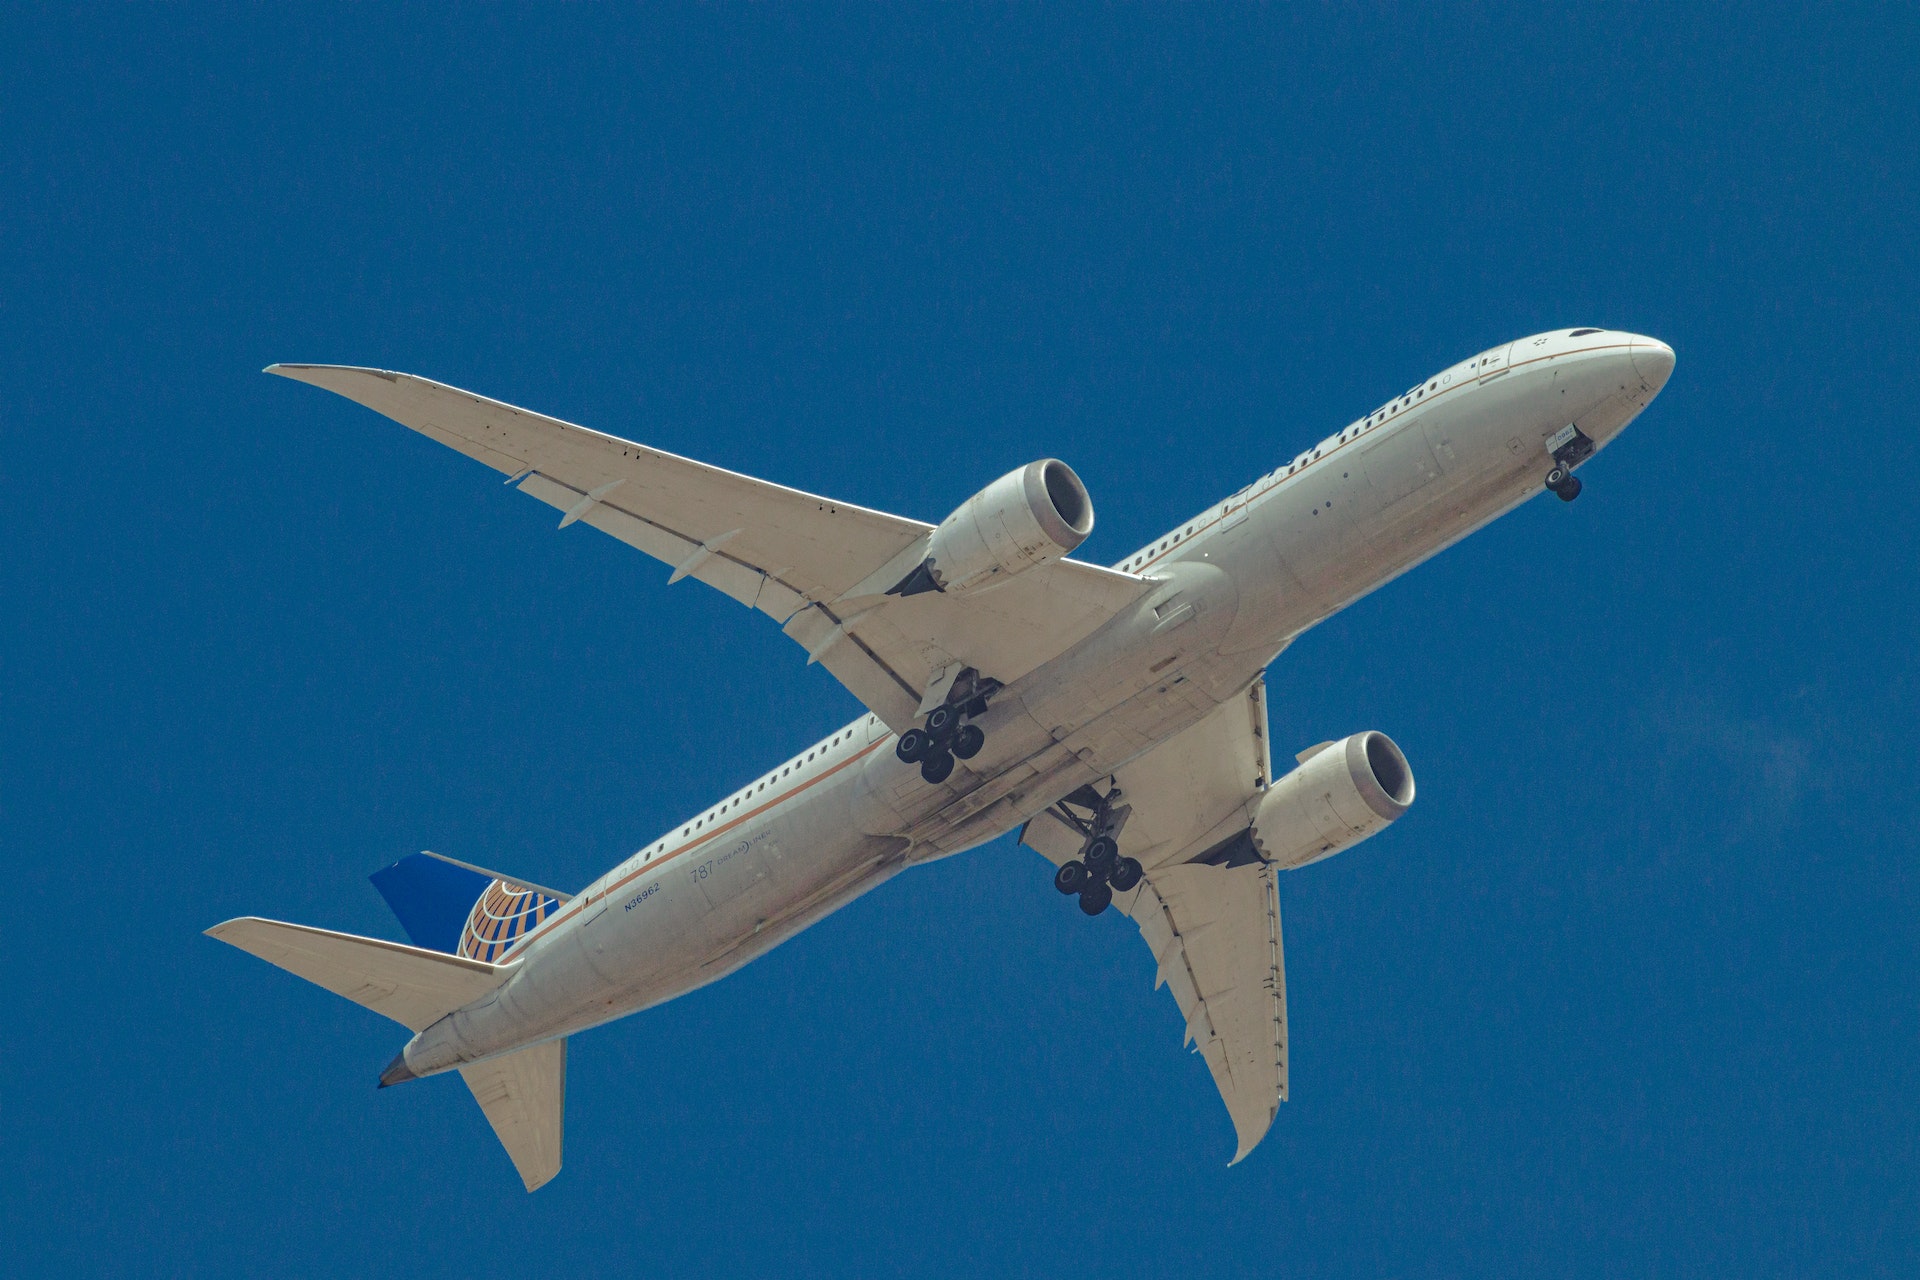 An airplane flying through clear blue sky